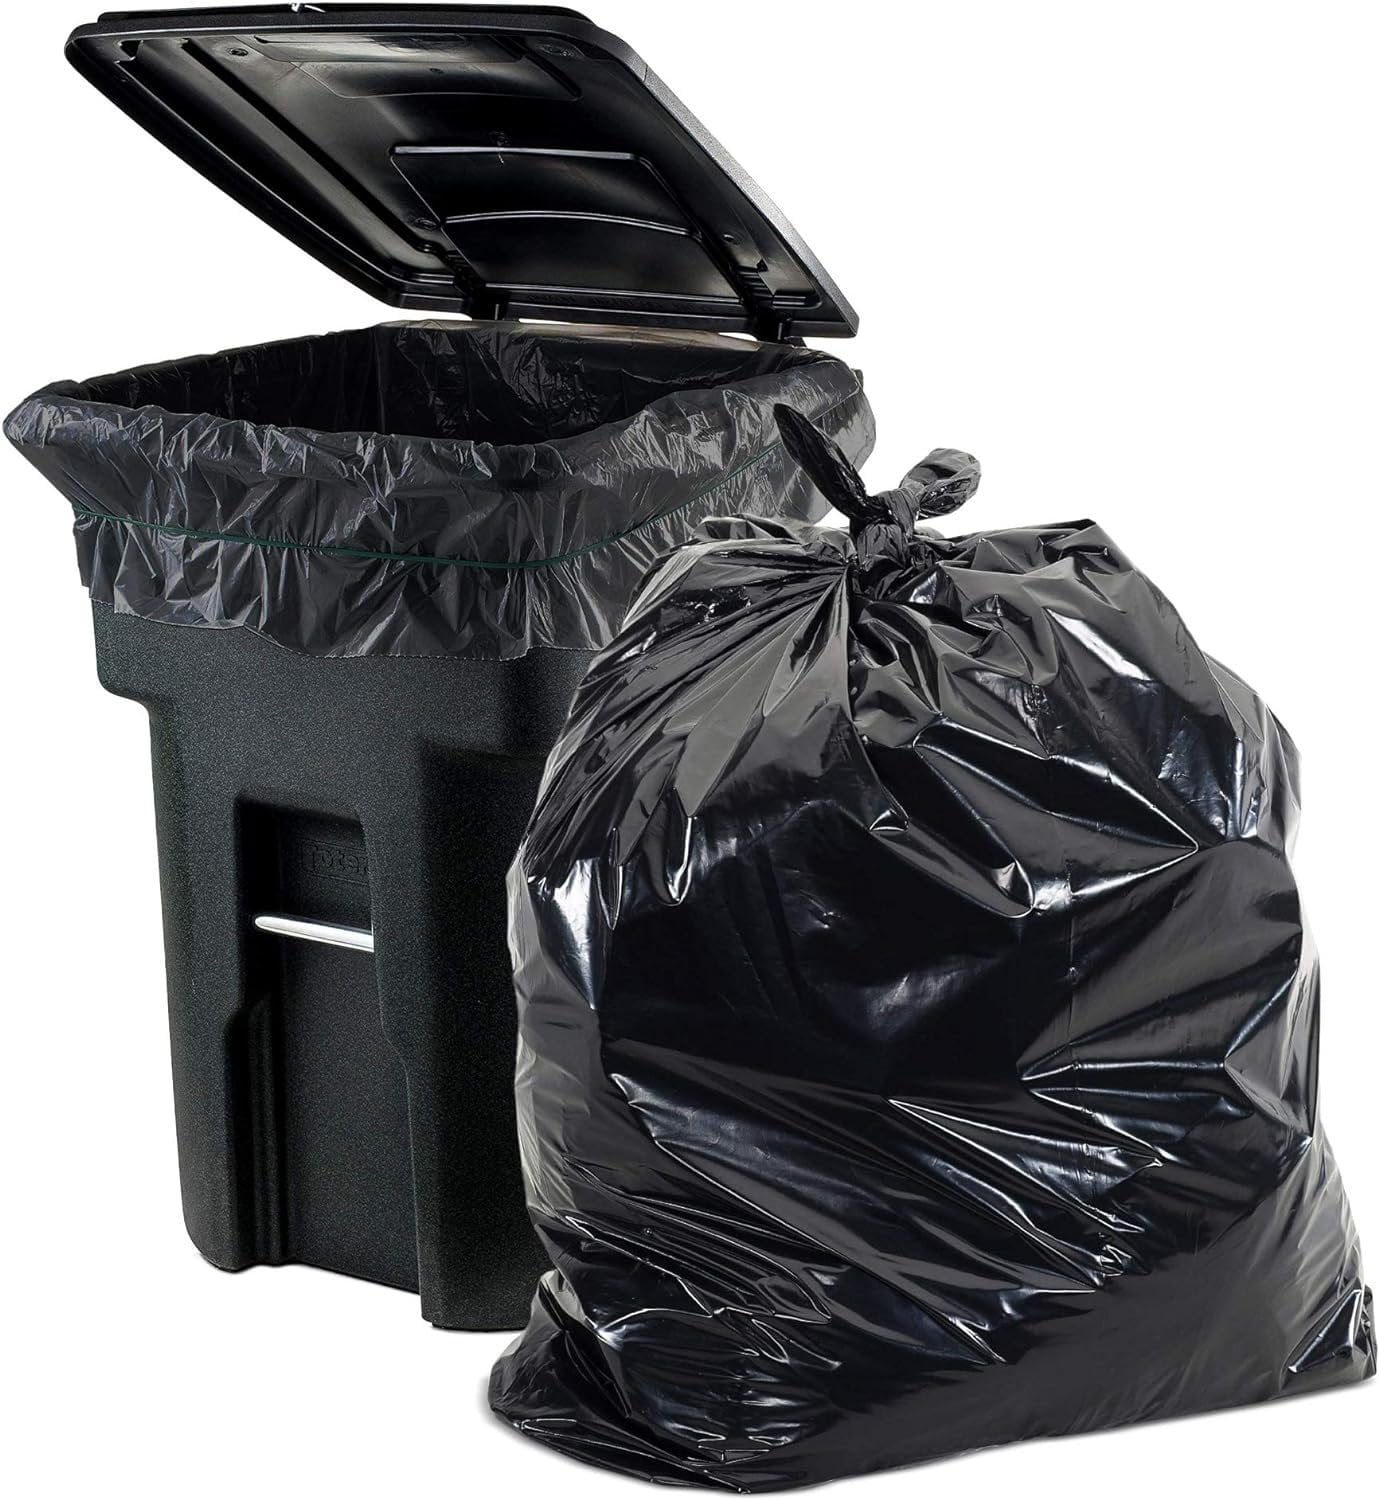 Trash Bags Big Size 85 cm x 110 cm 10 Bags|مرقاب|Morgap